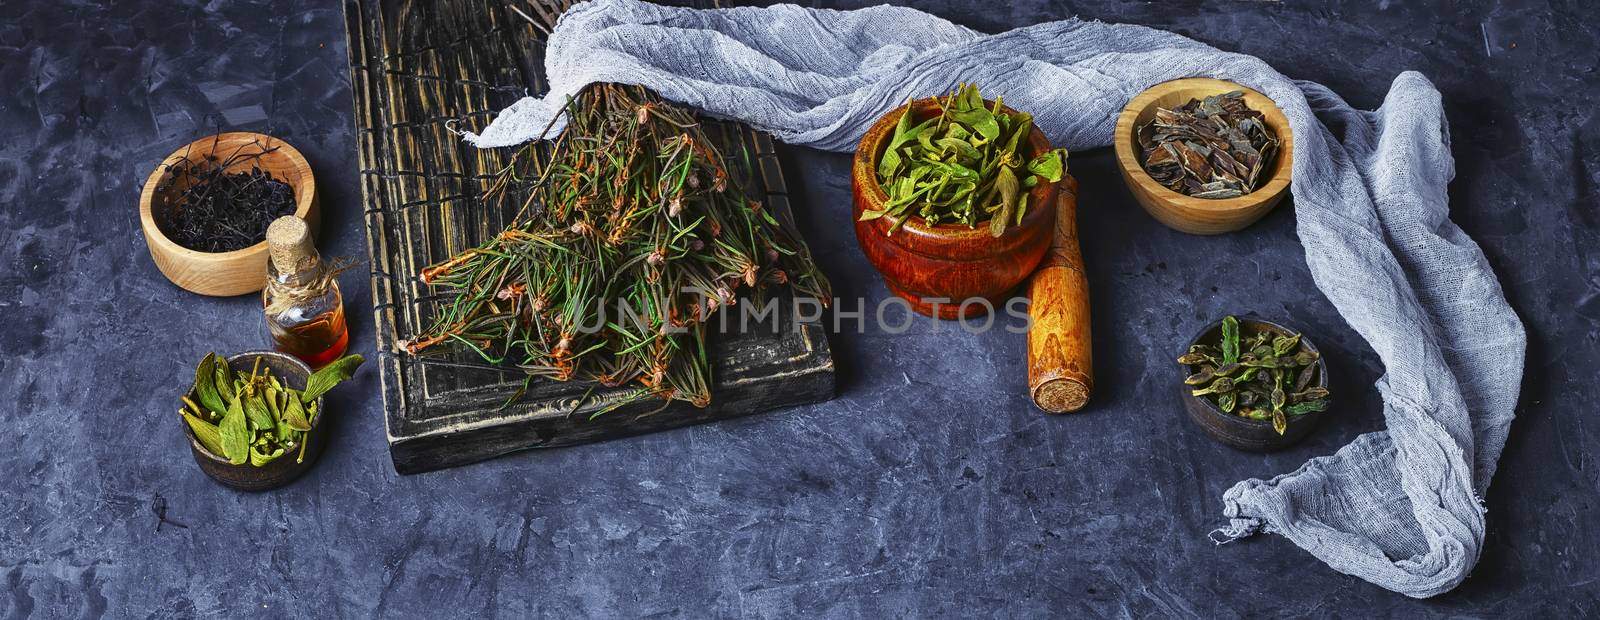 Harvest of medicinal herb by LMykola